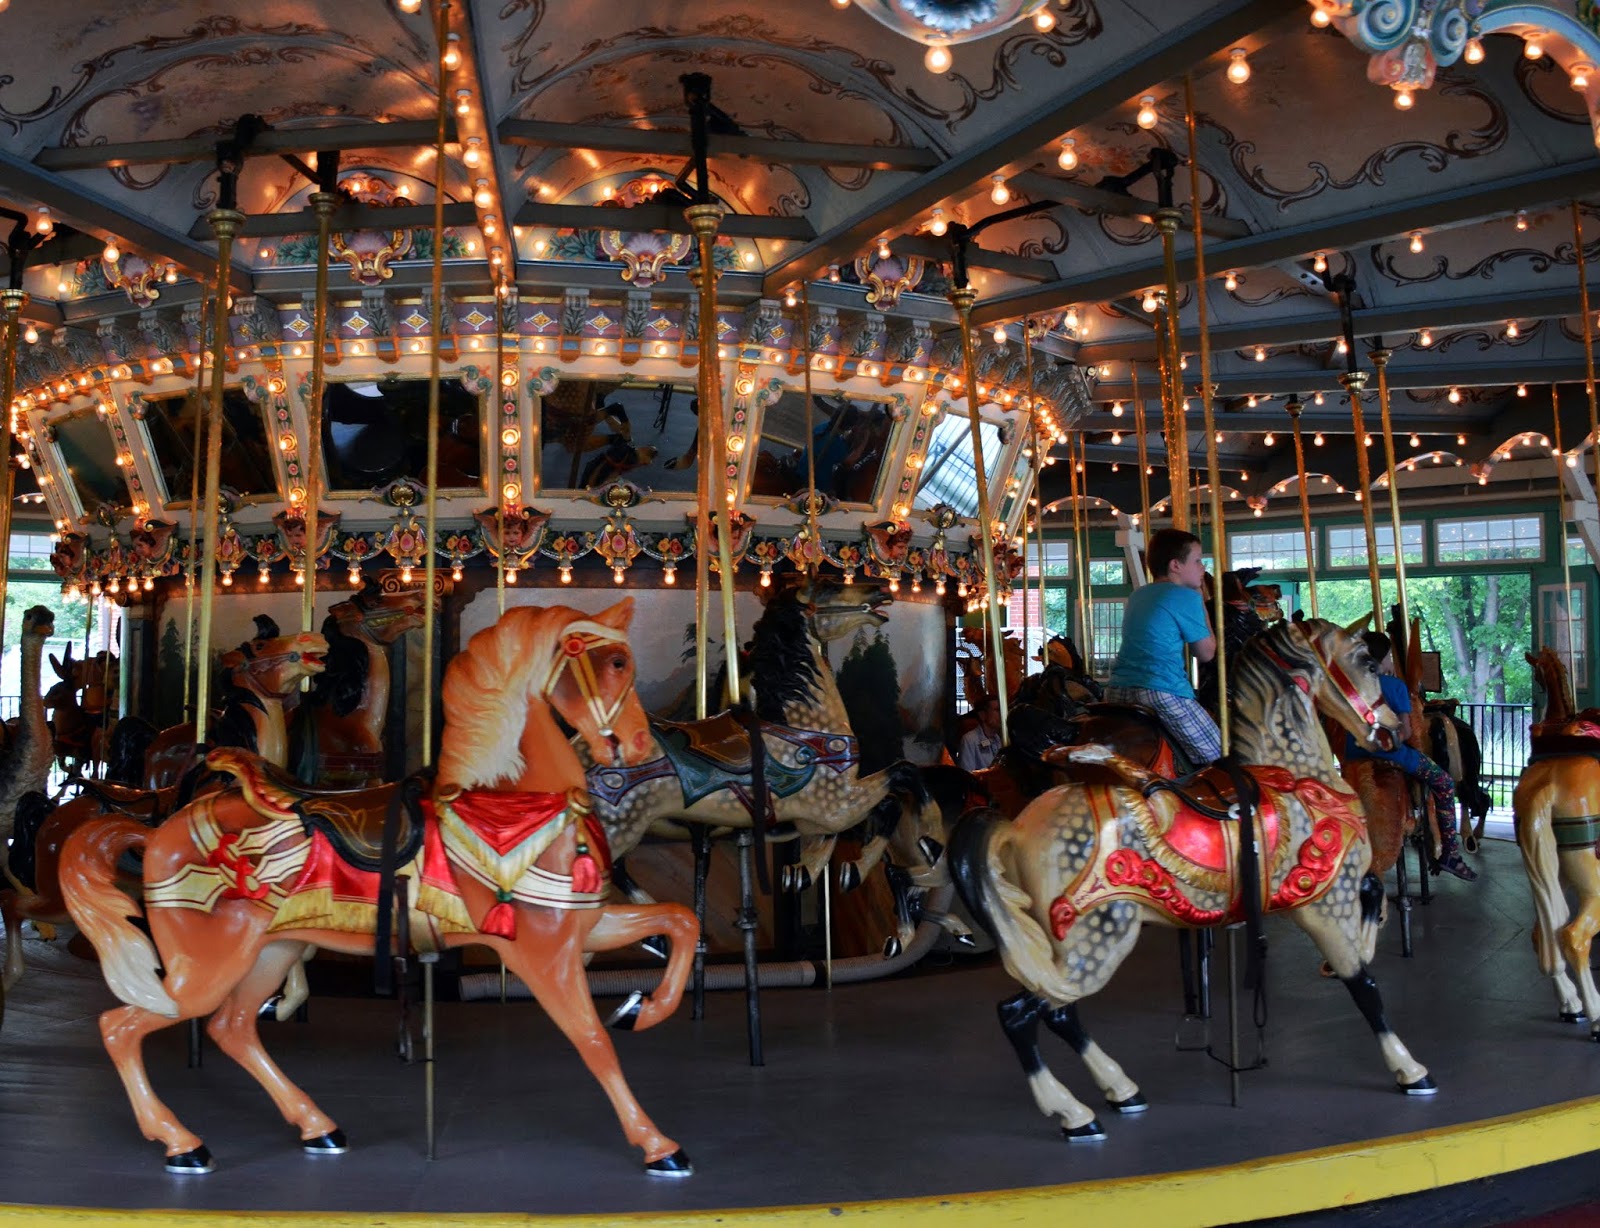 Celebrating National MerryGoRound aka Carousel Day!